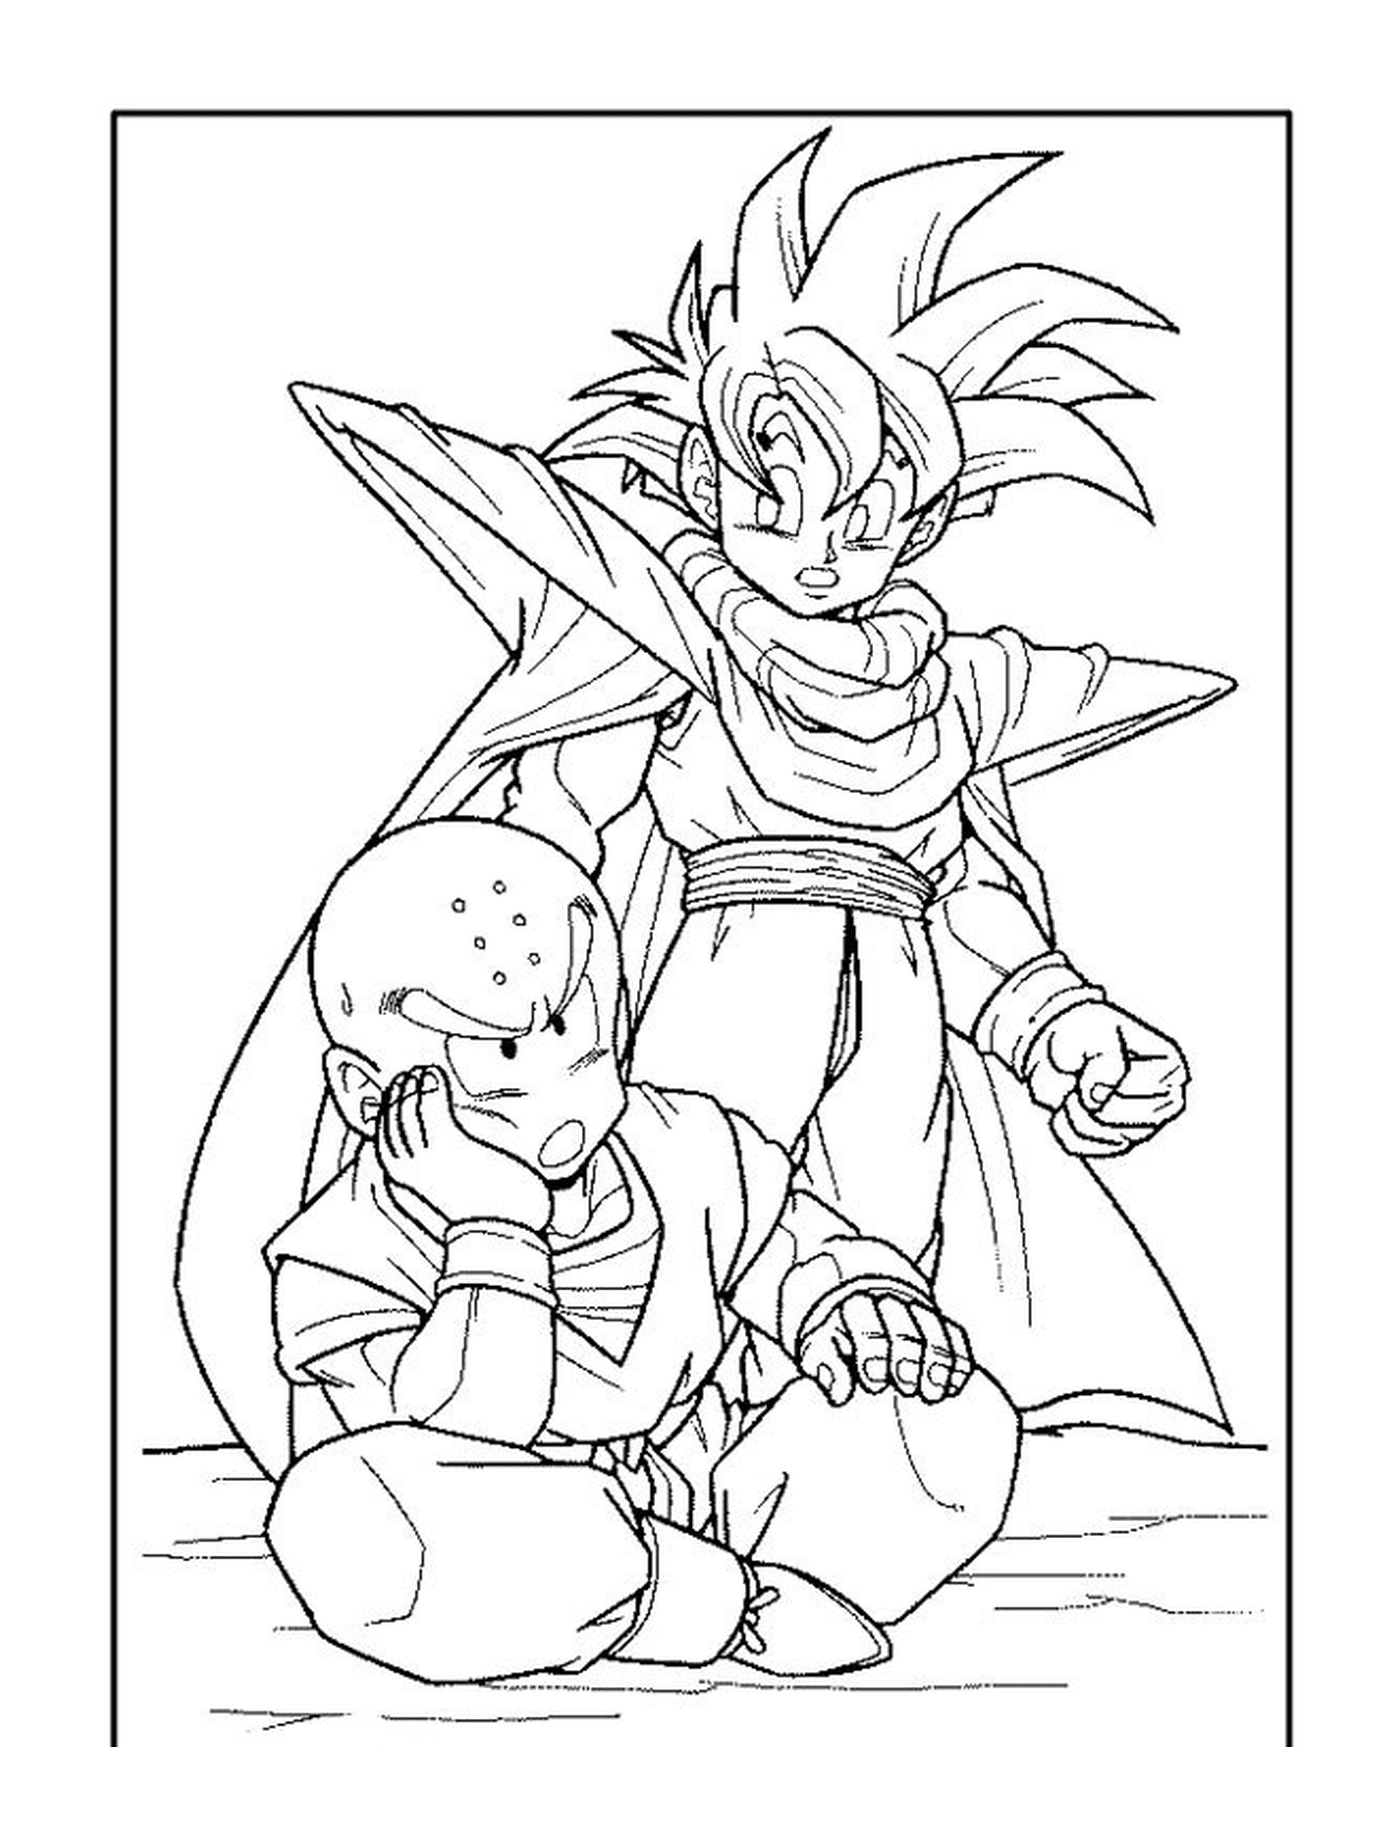   Goku et Krillin, duo de Dragon Ball Z 